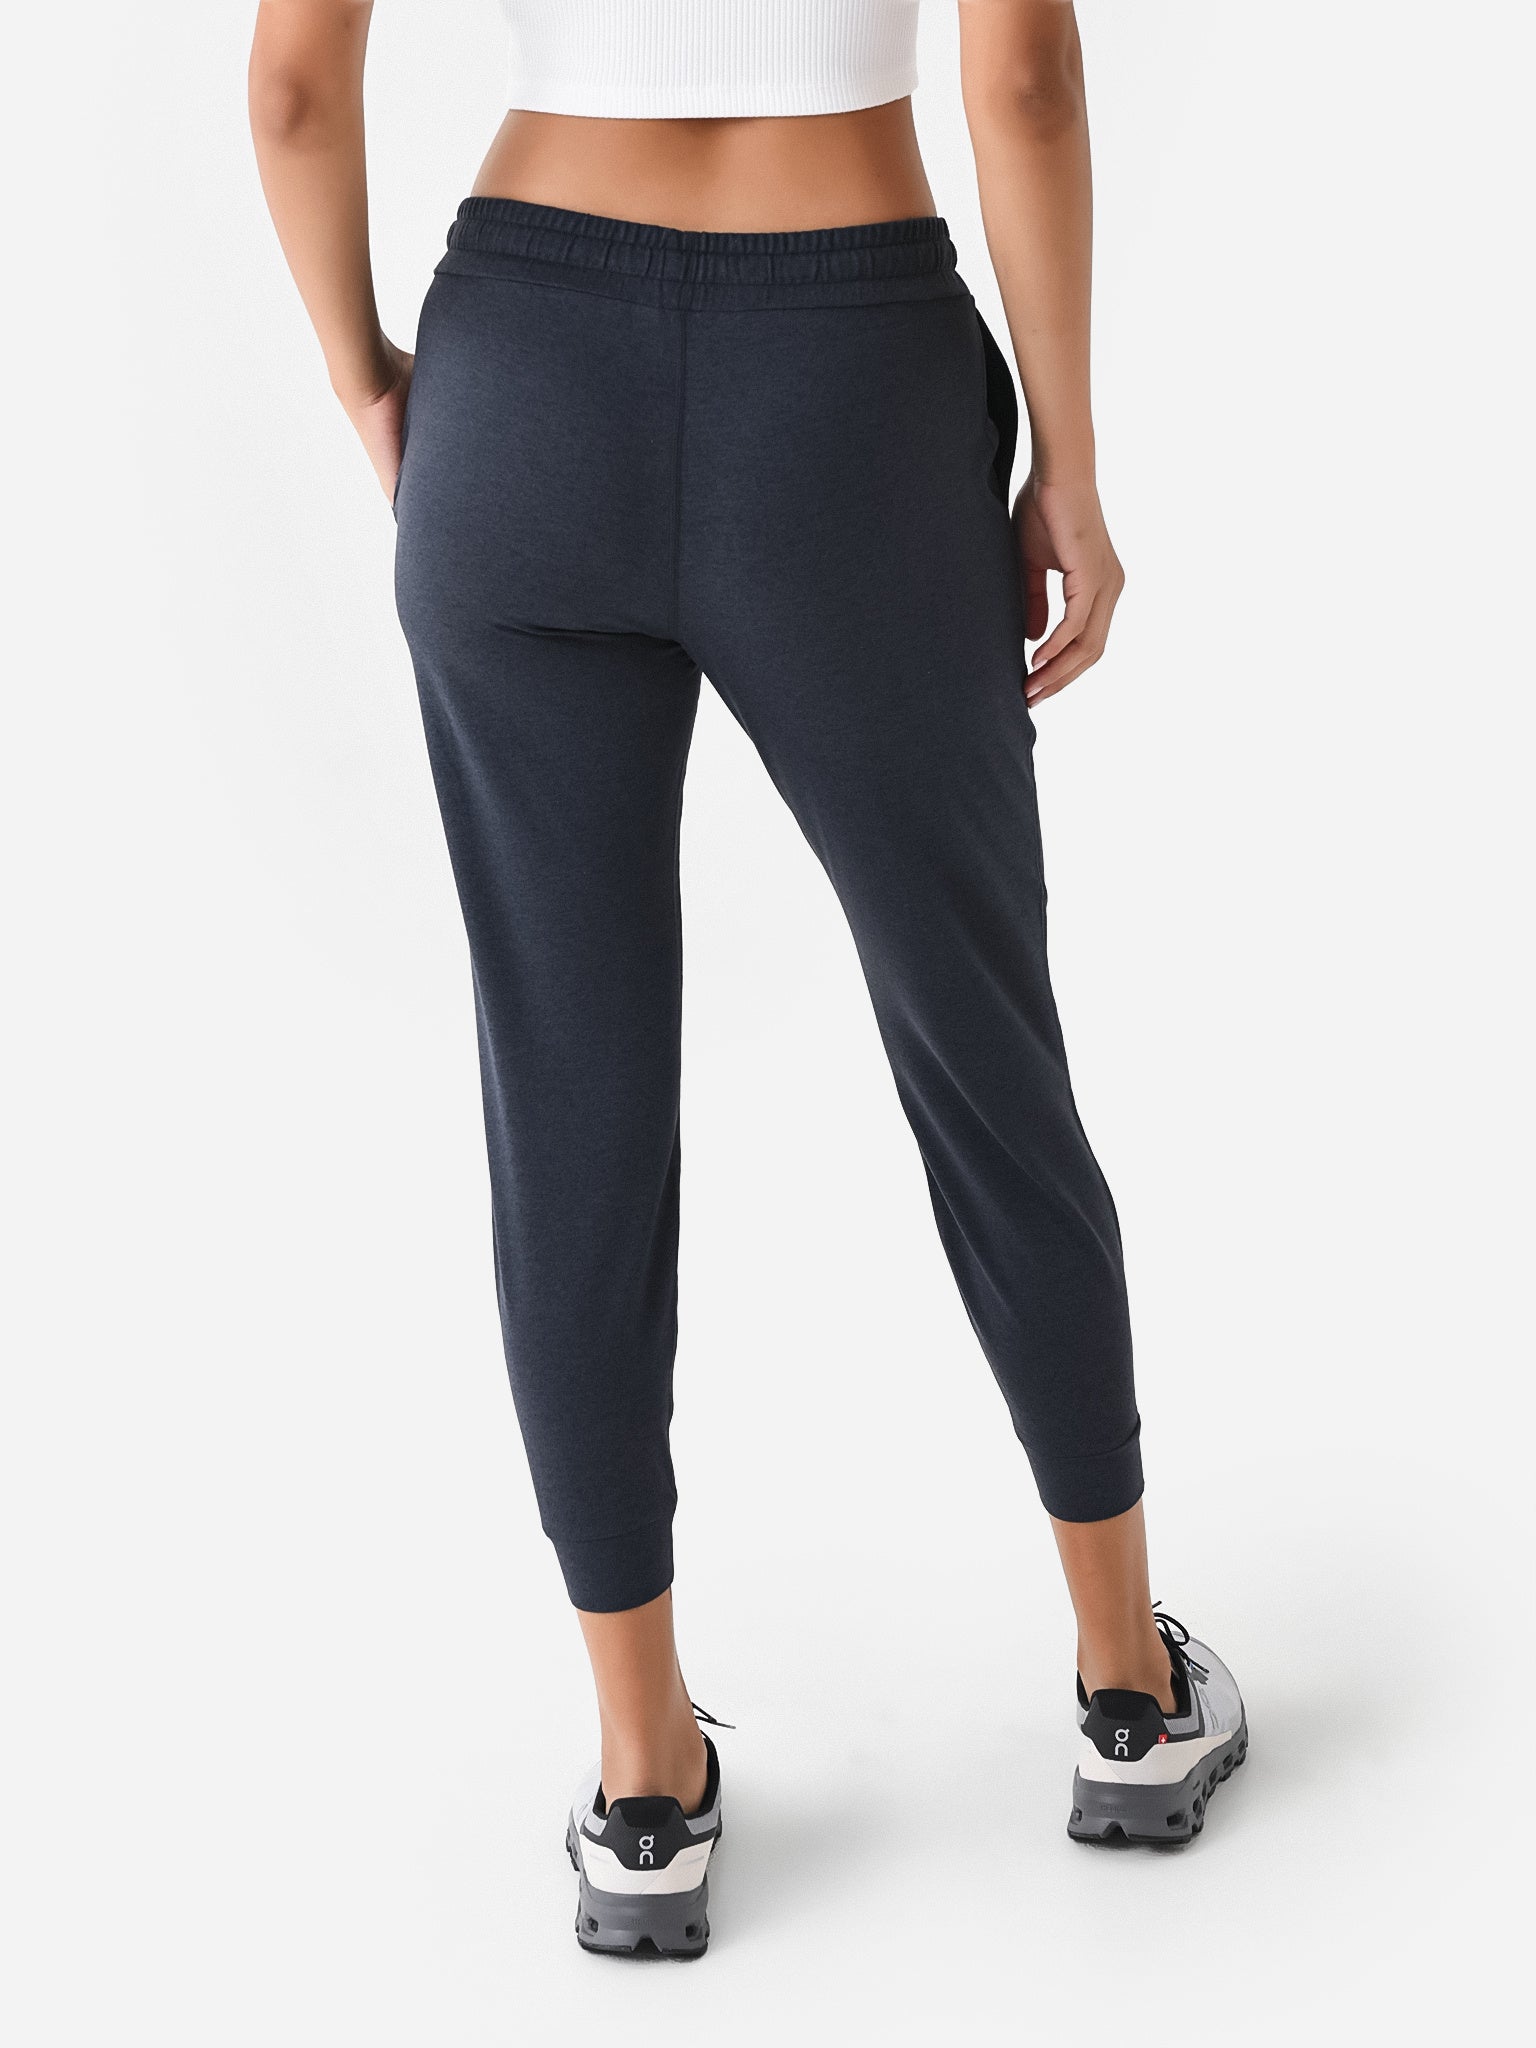 Lululemon capri leggings with ruffled legs and back zipper pocket. Grey  Size 4